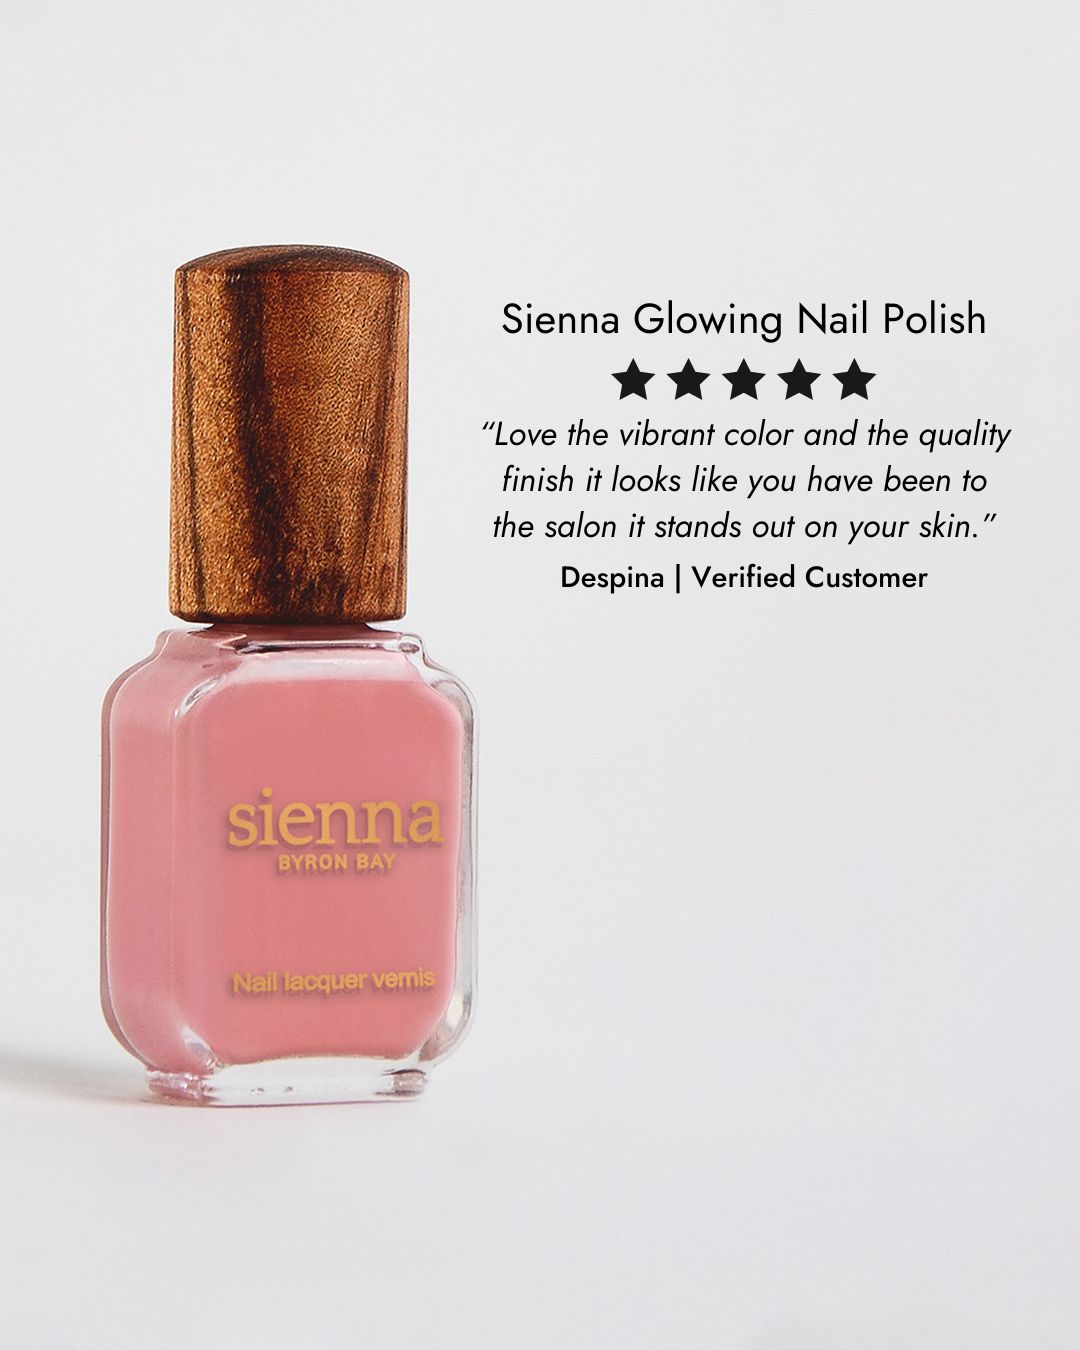 peachy pink nail polish bottle 5 star review